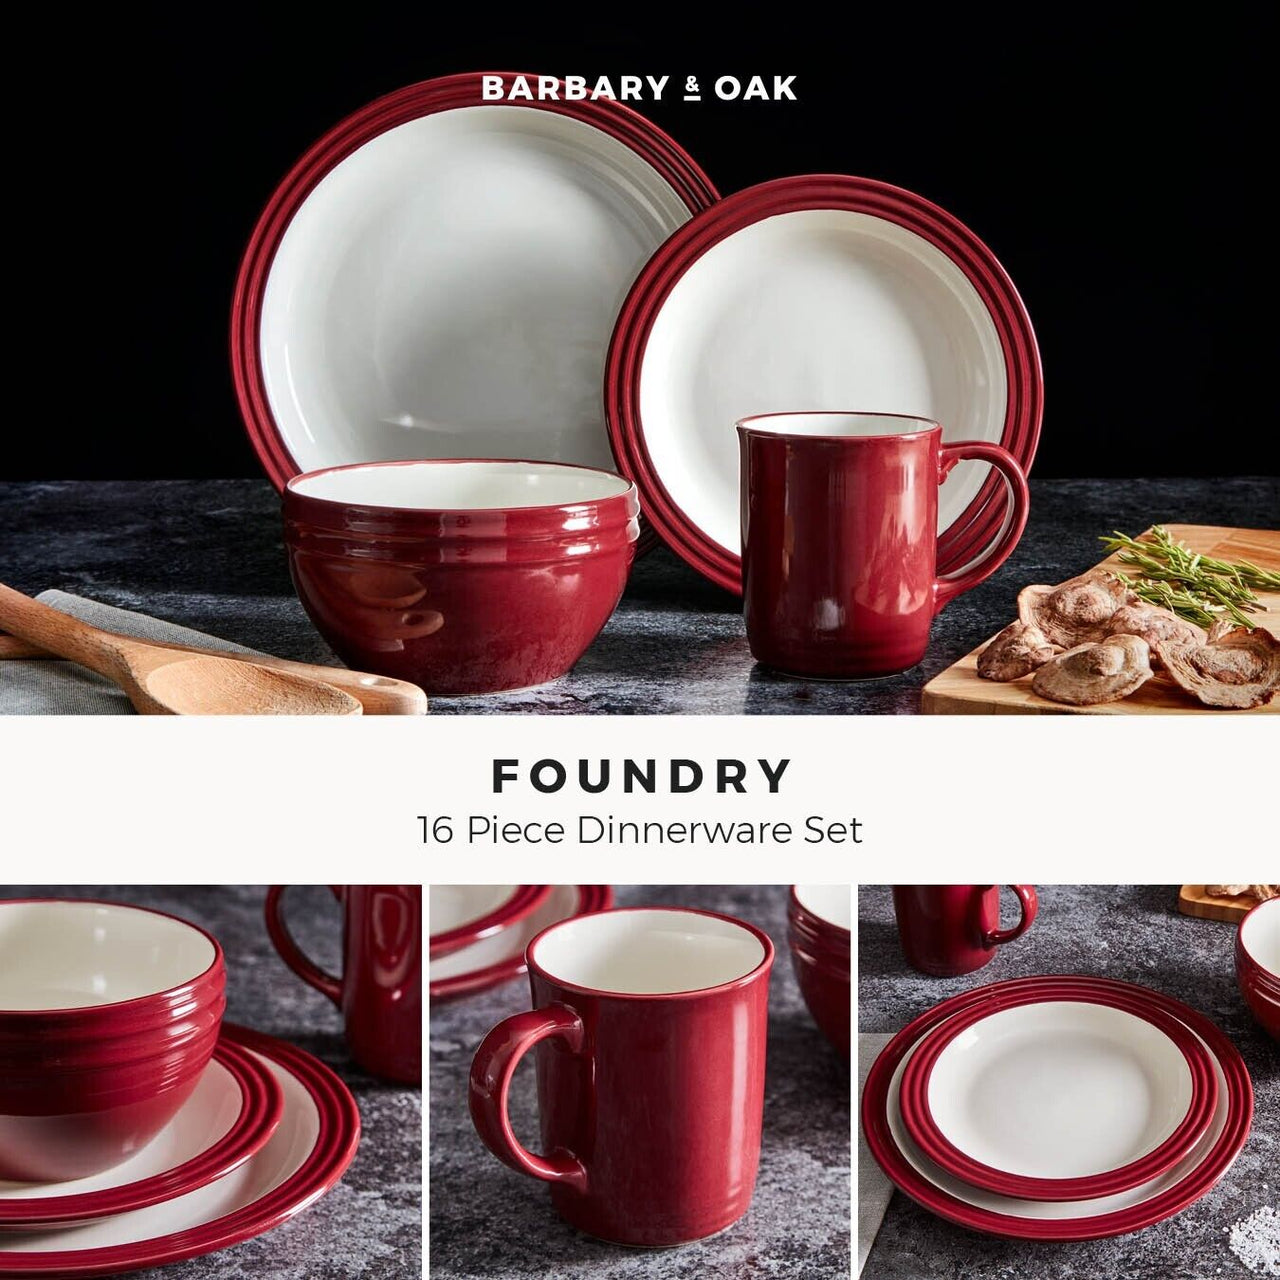 Barbary & Oak Foundry 16 Piece Dinnerware Set in Bordeaux Red BO867011RED